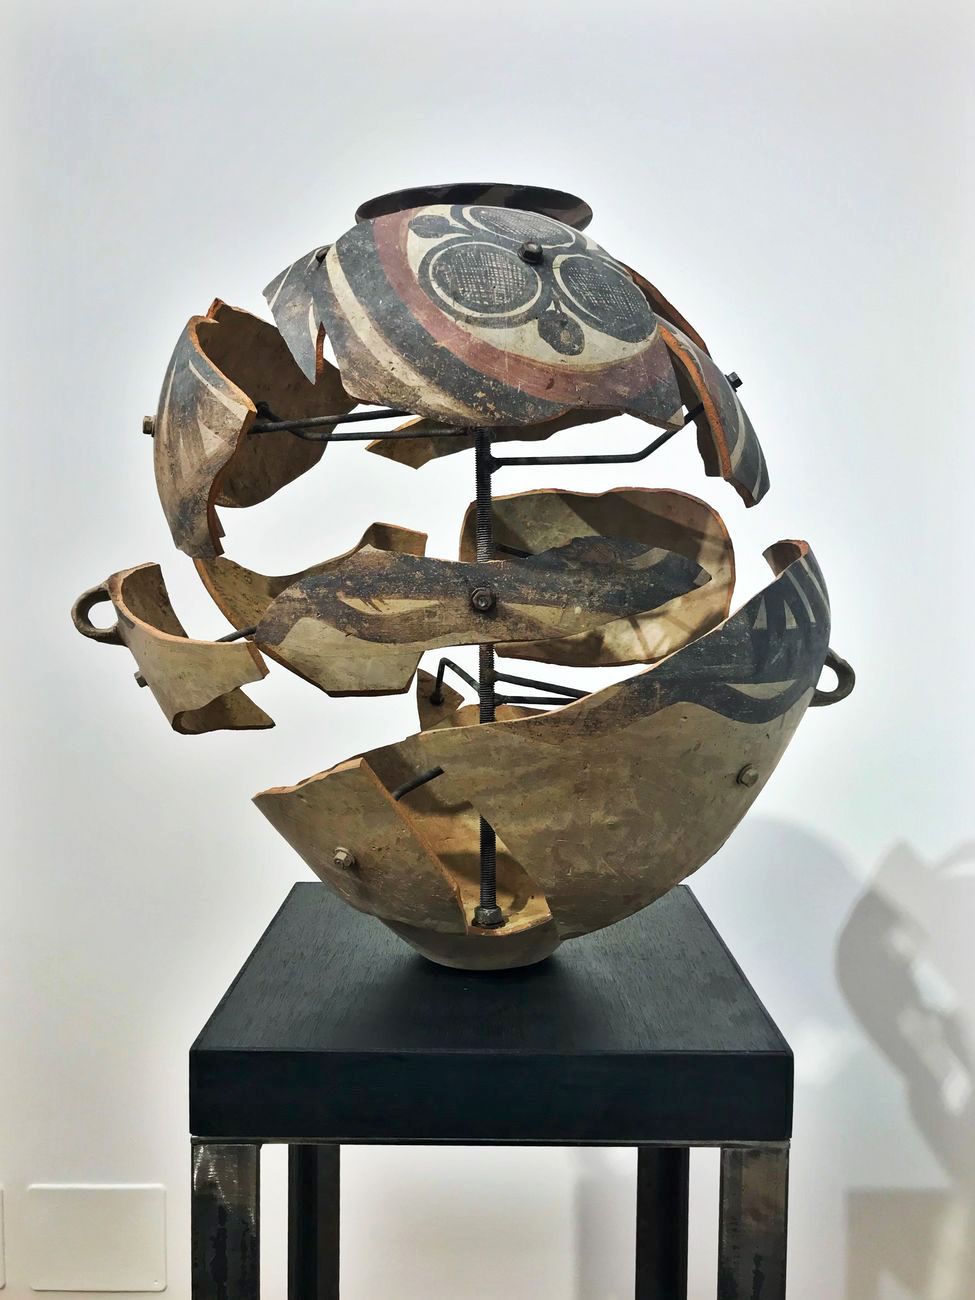 Bouke de Vries, Deconstructed neolothic jar, vaso neolitico di provenienza cinese in terracotta, 2017. Photo Giulia Kimberly Colombo